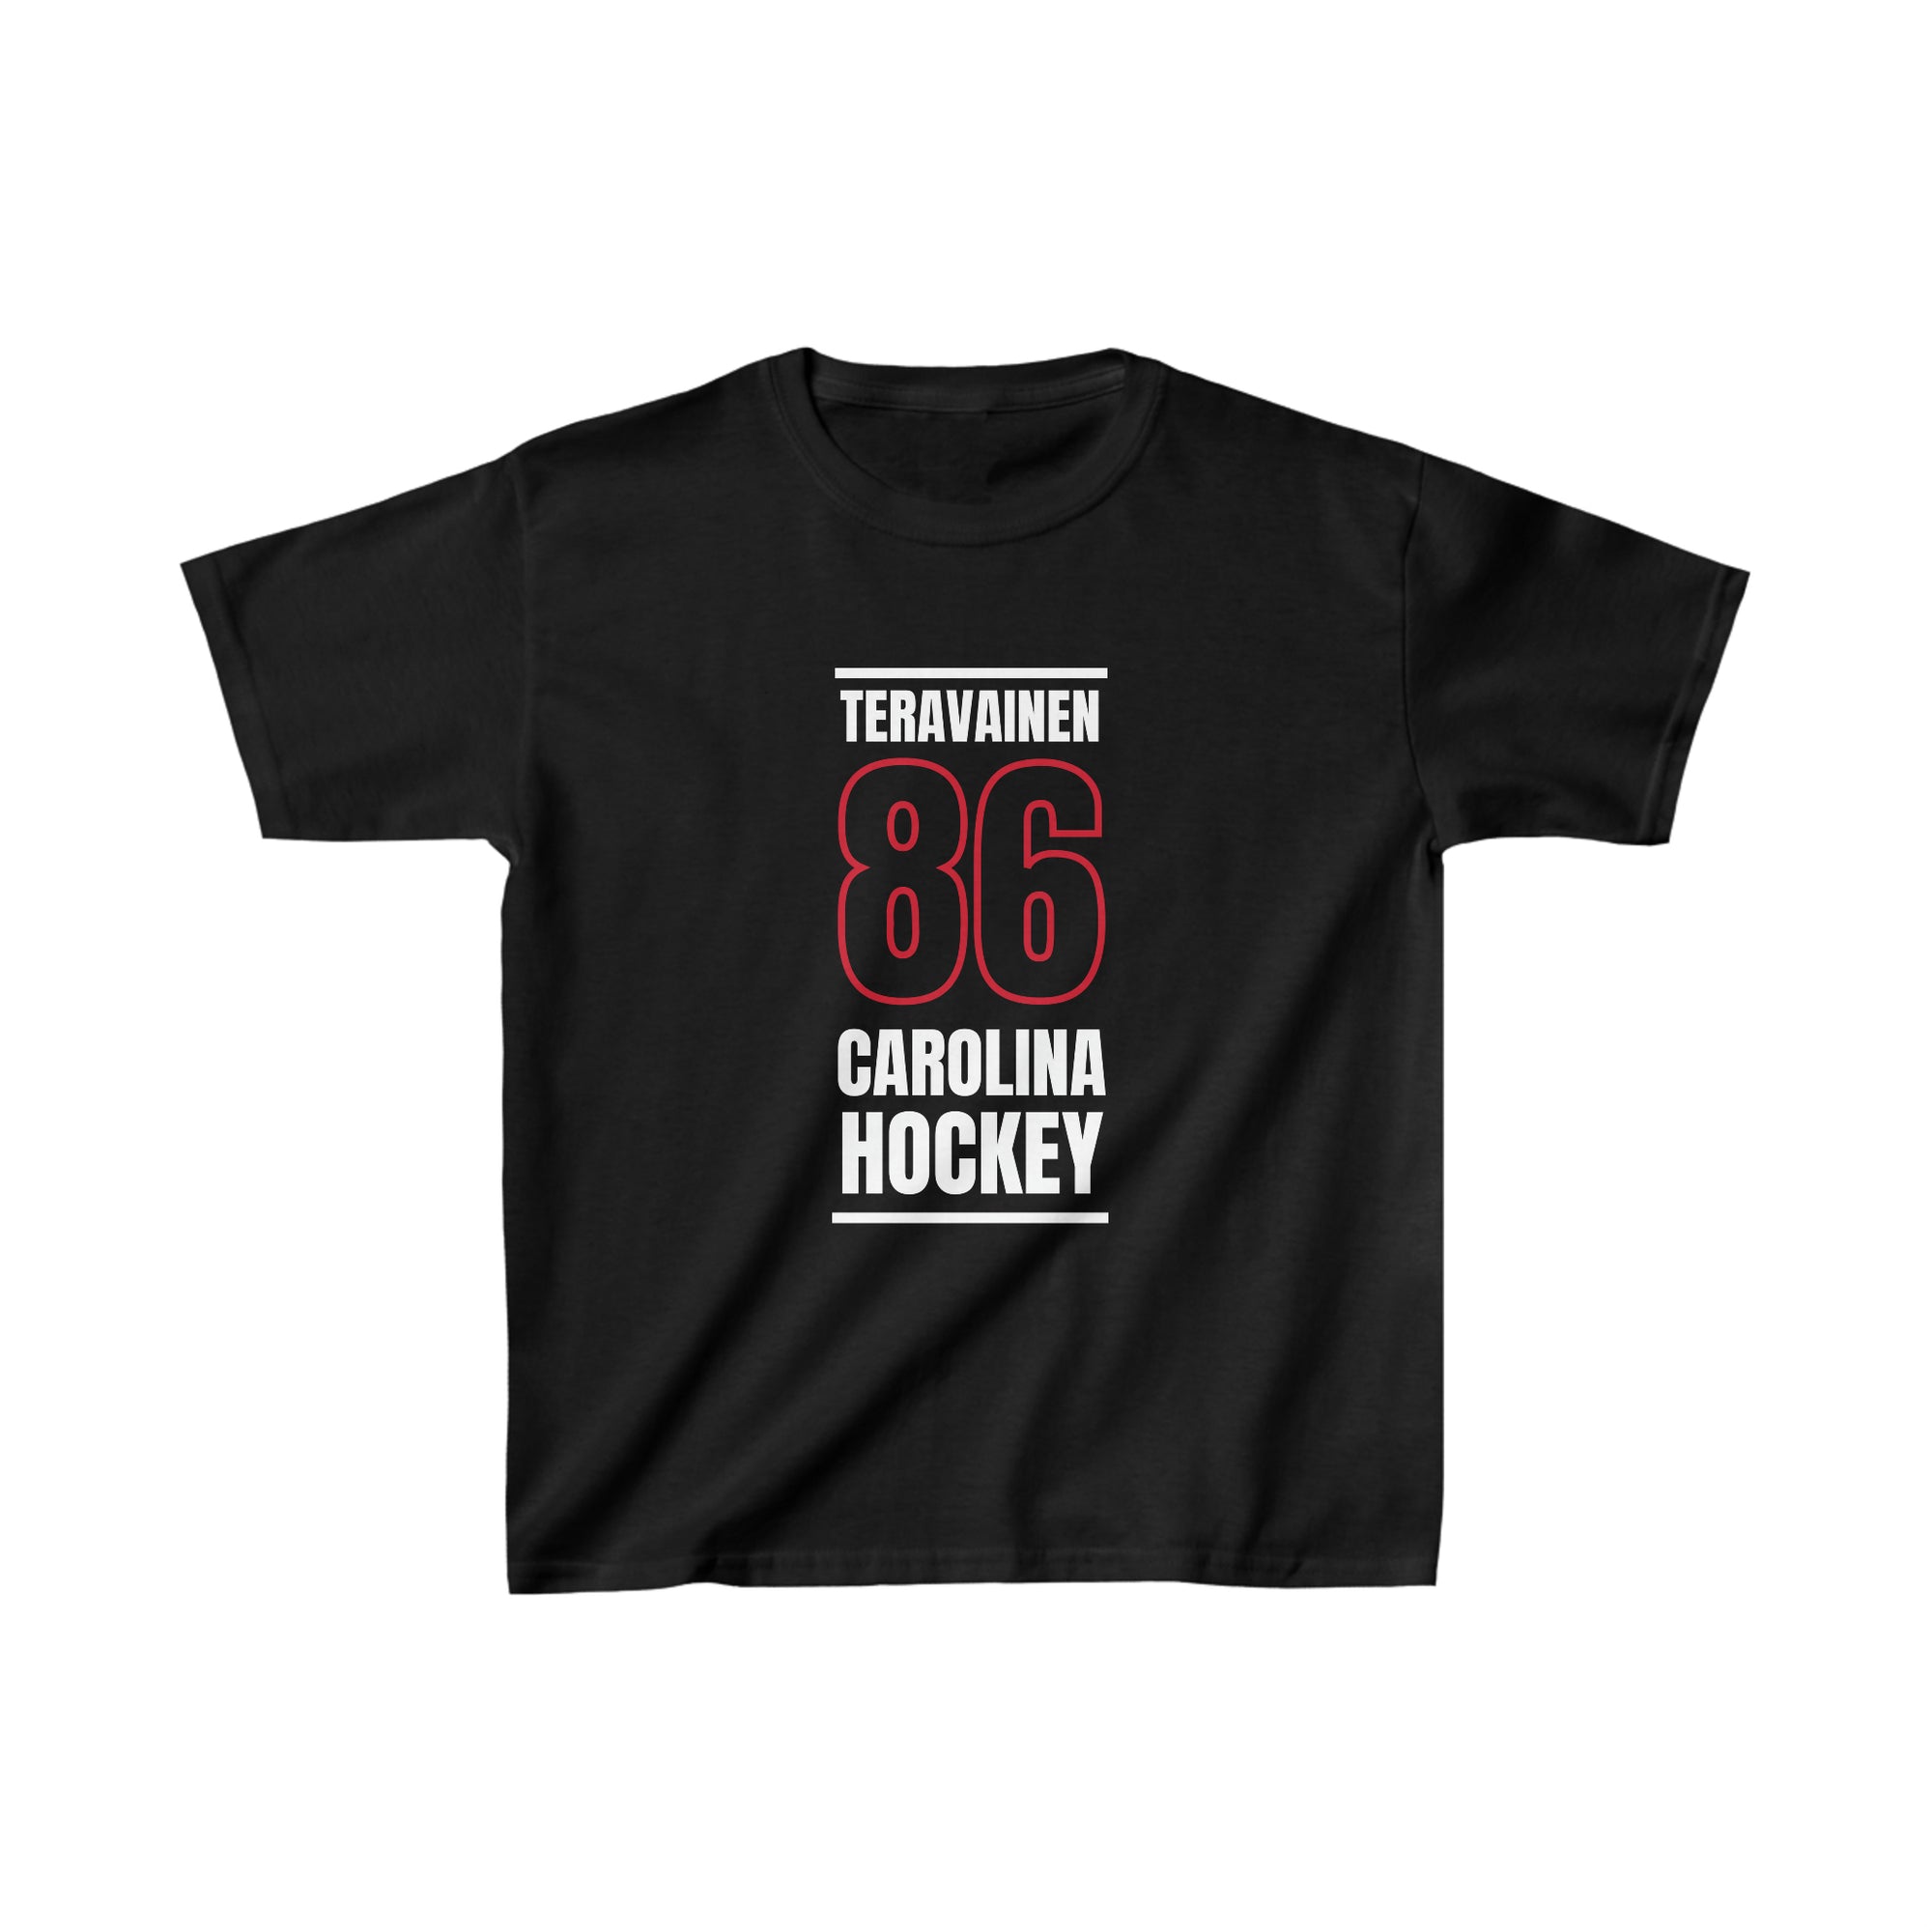 Teravainen 86 Carolina Hockey Black Vertical Design Kids Tee